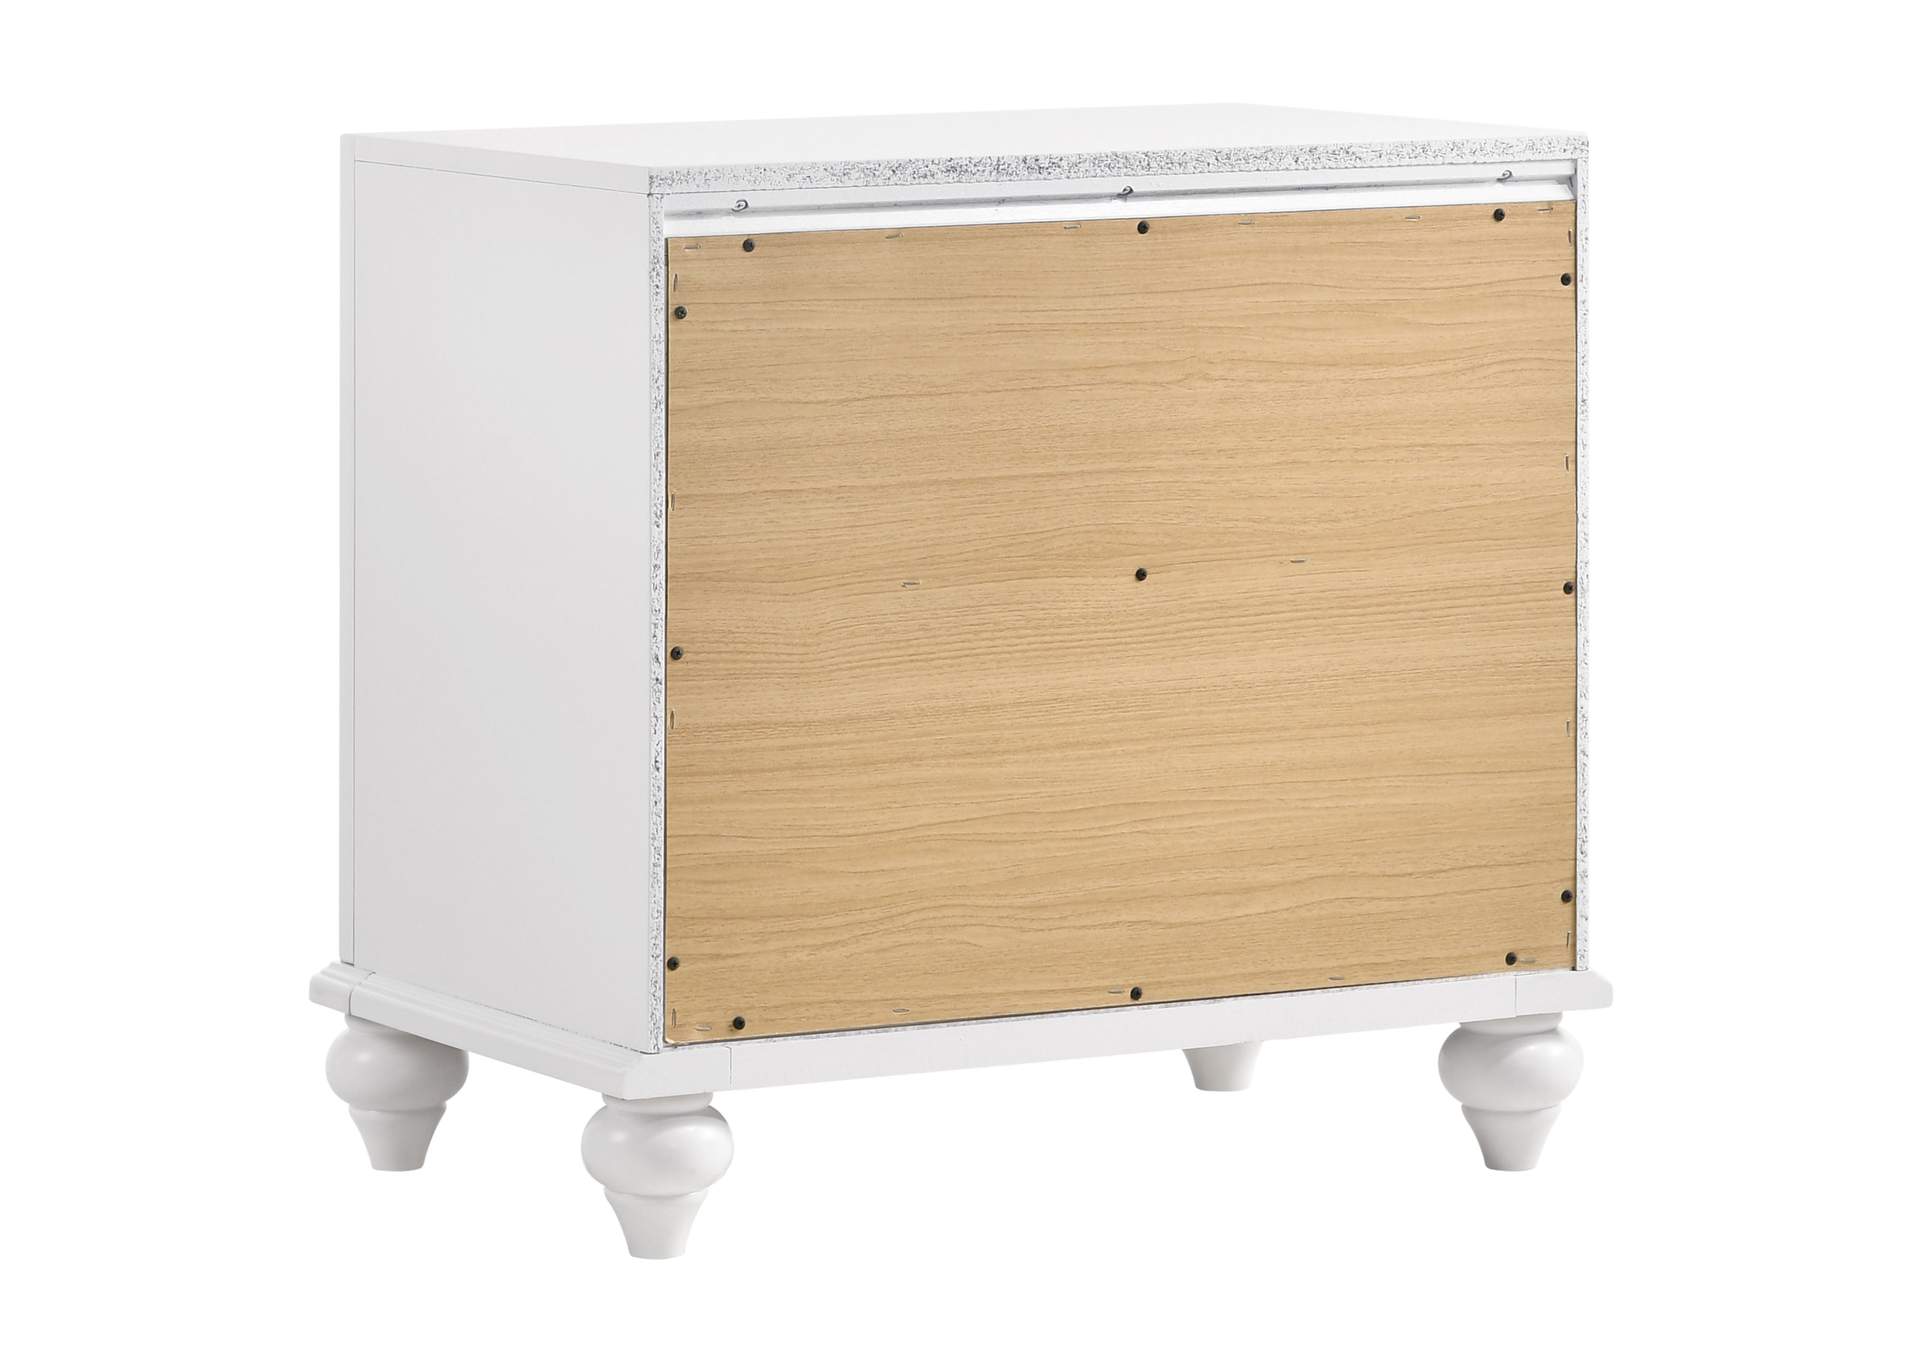 Barzini 2-drawer Nightstand White,Coaster Furniture